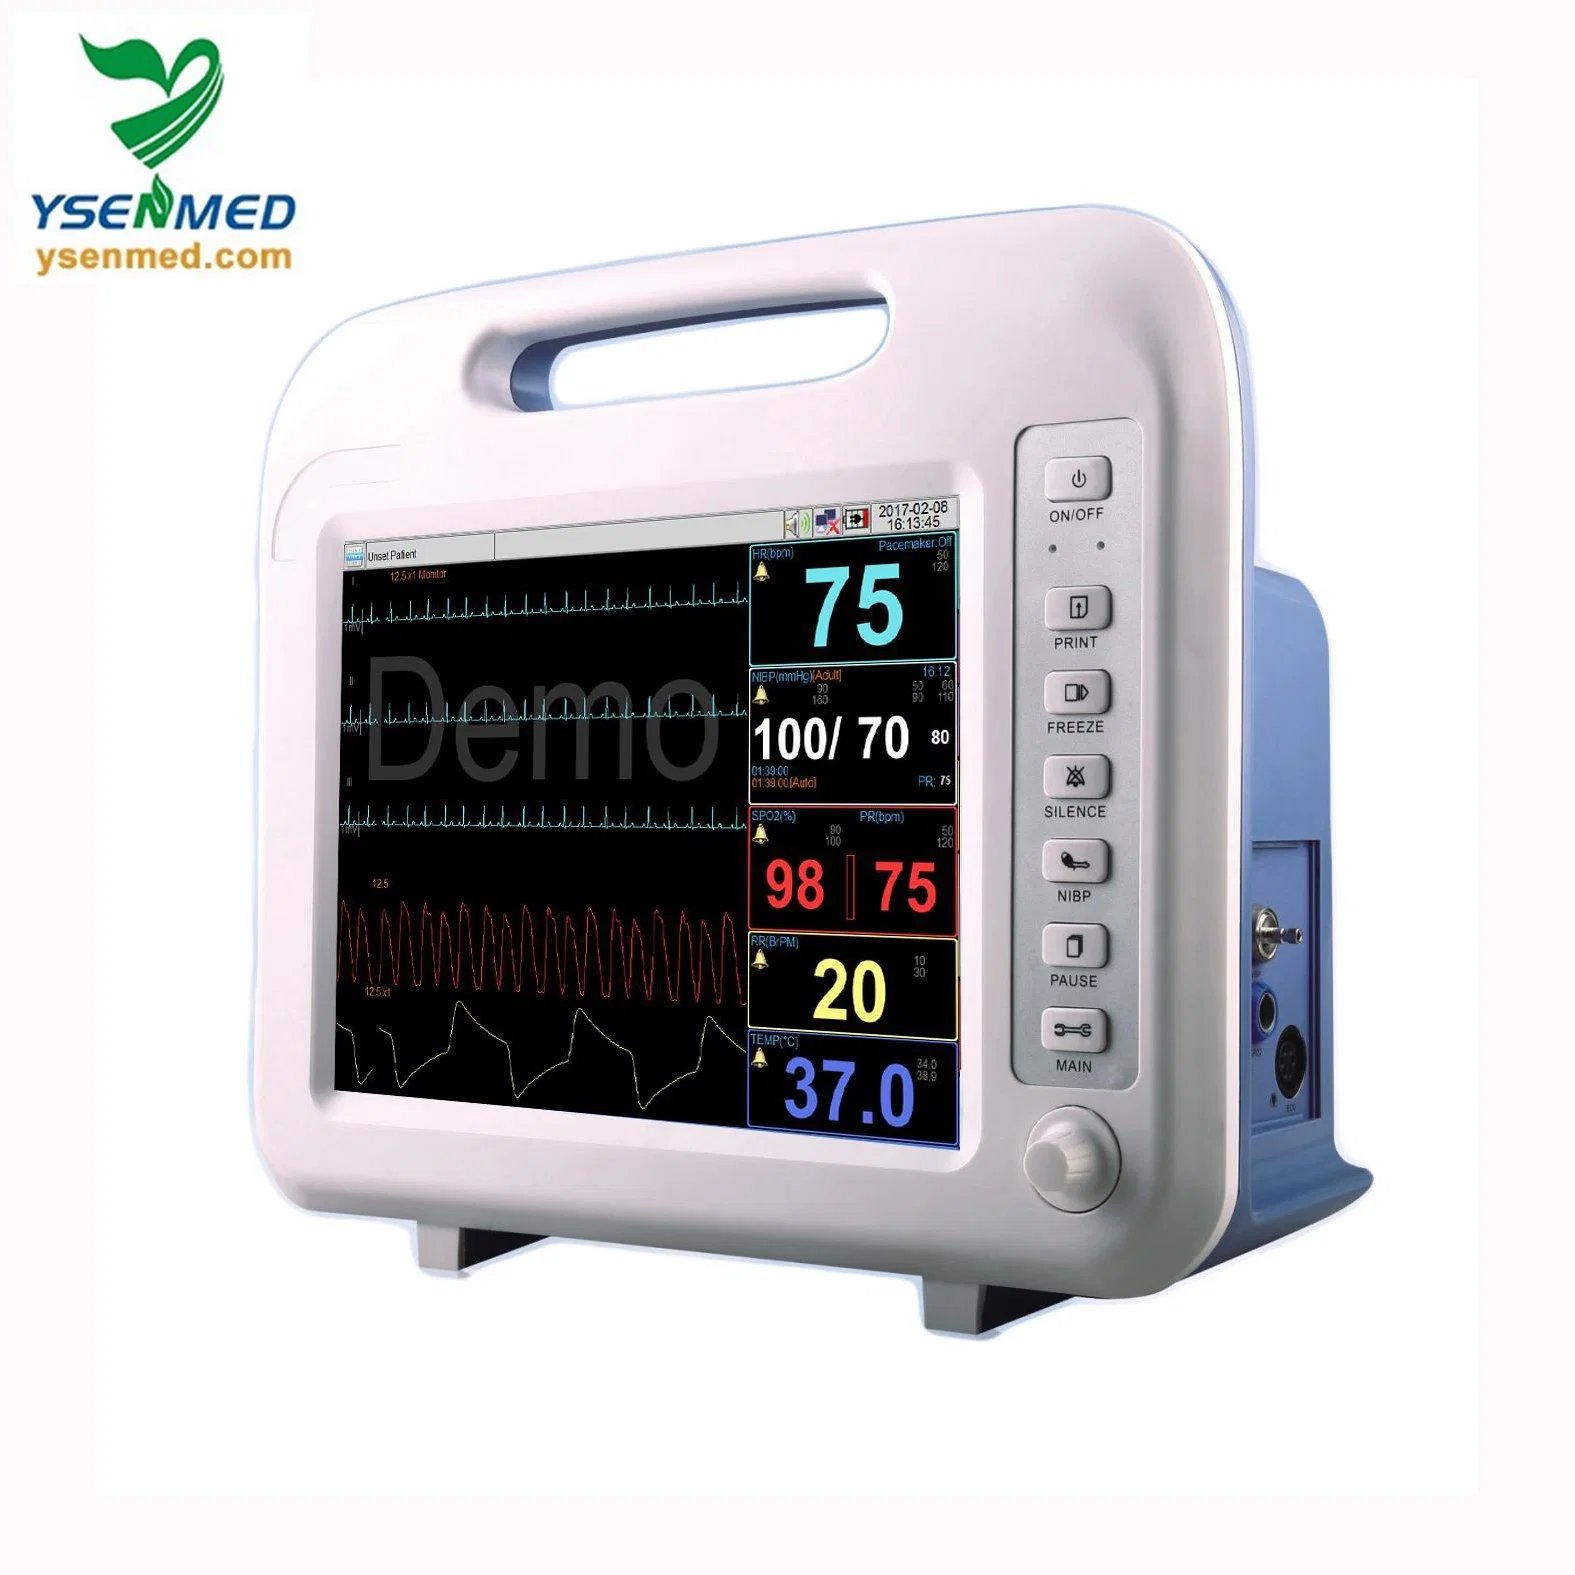 Ysf6 Hospital Medical Operating Multi-Parameter Patient Monitor